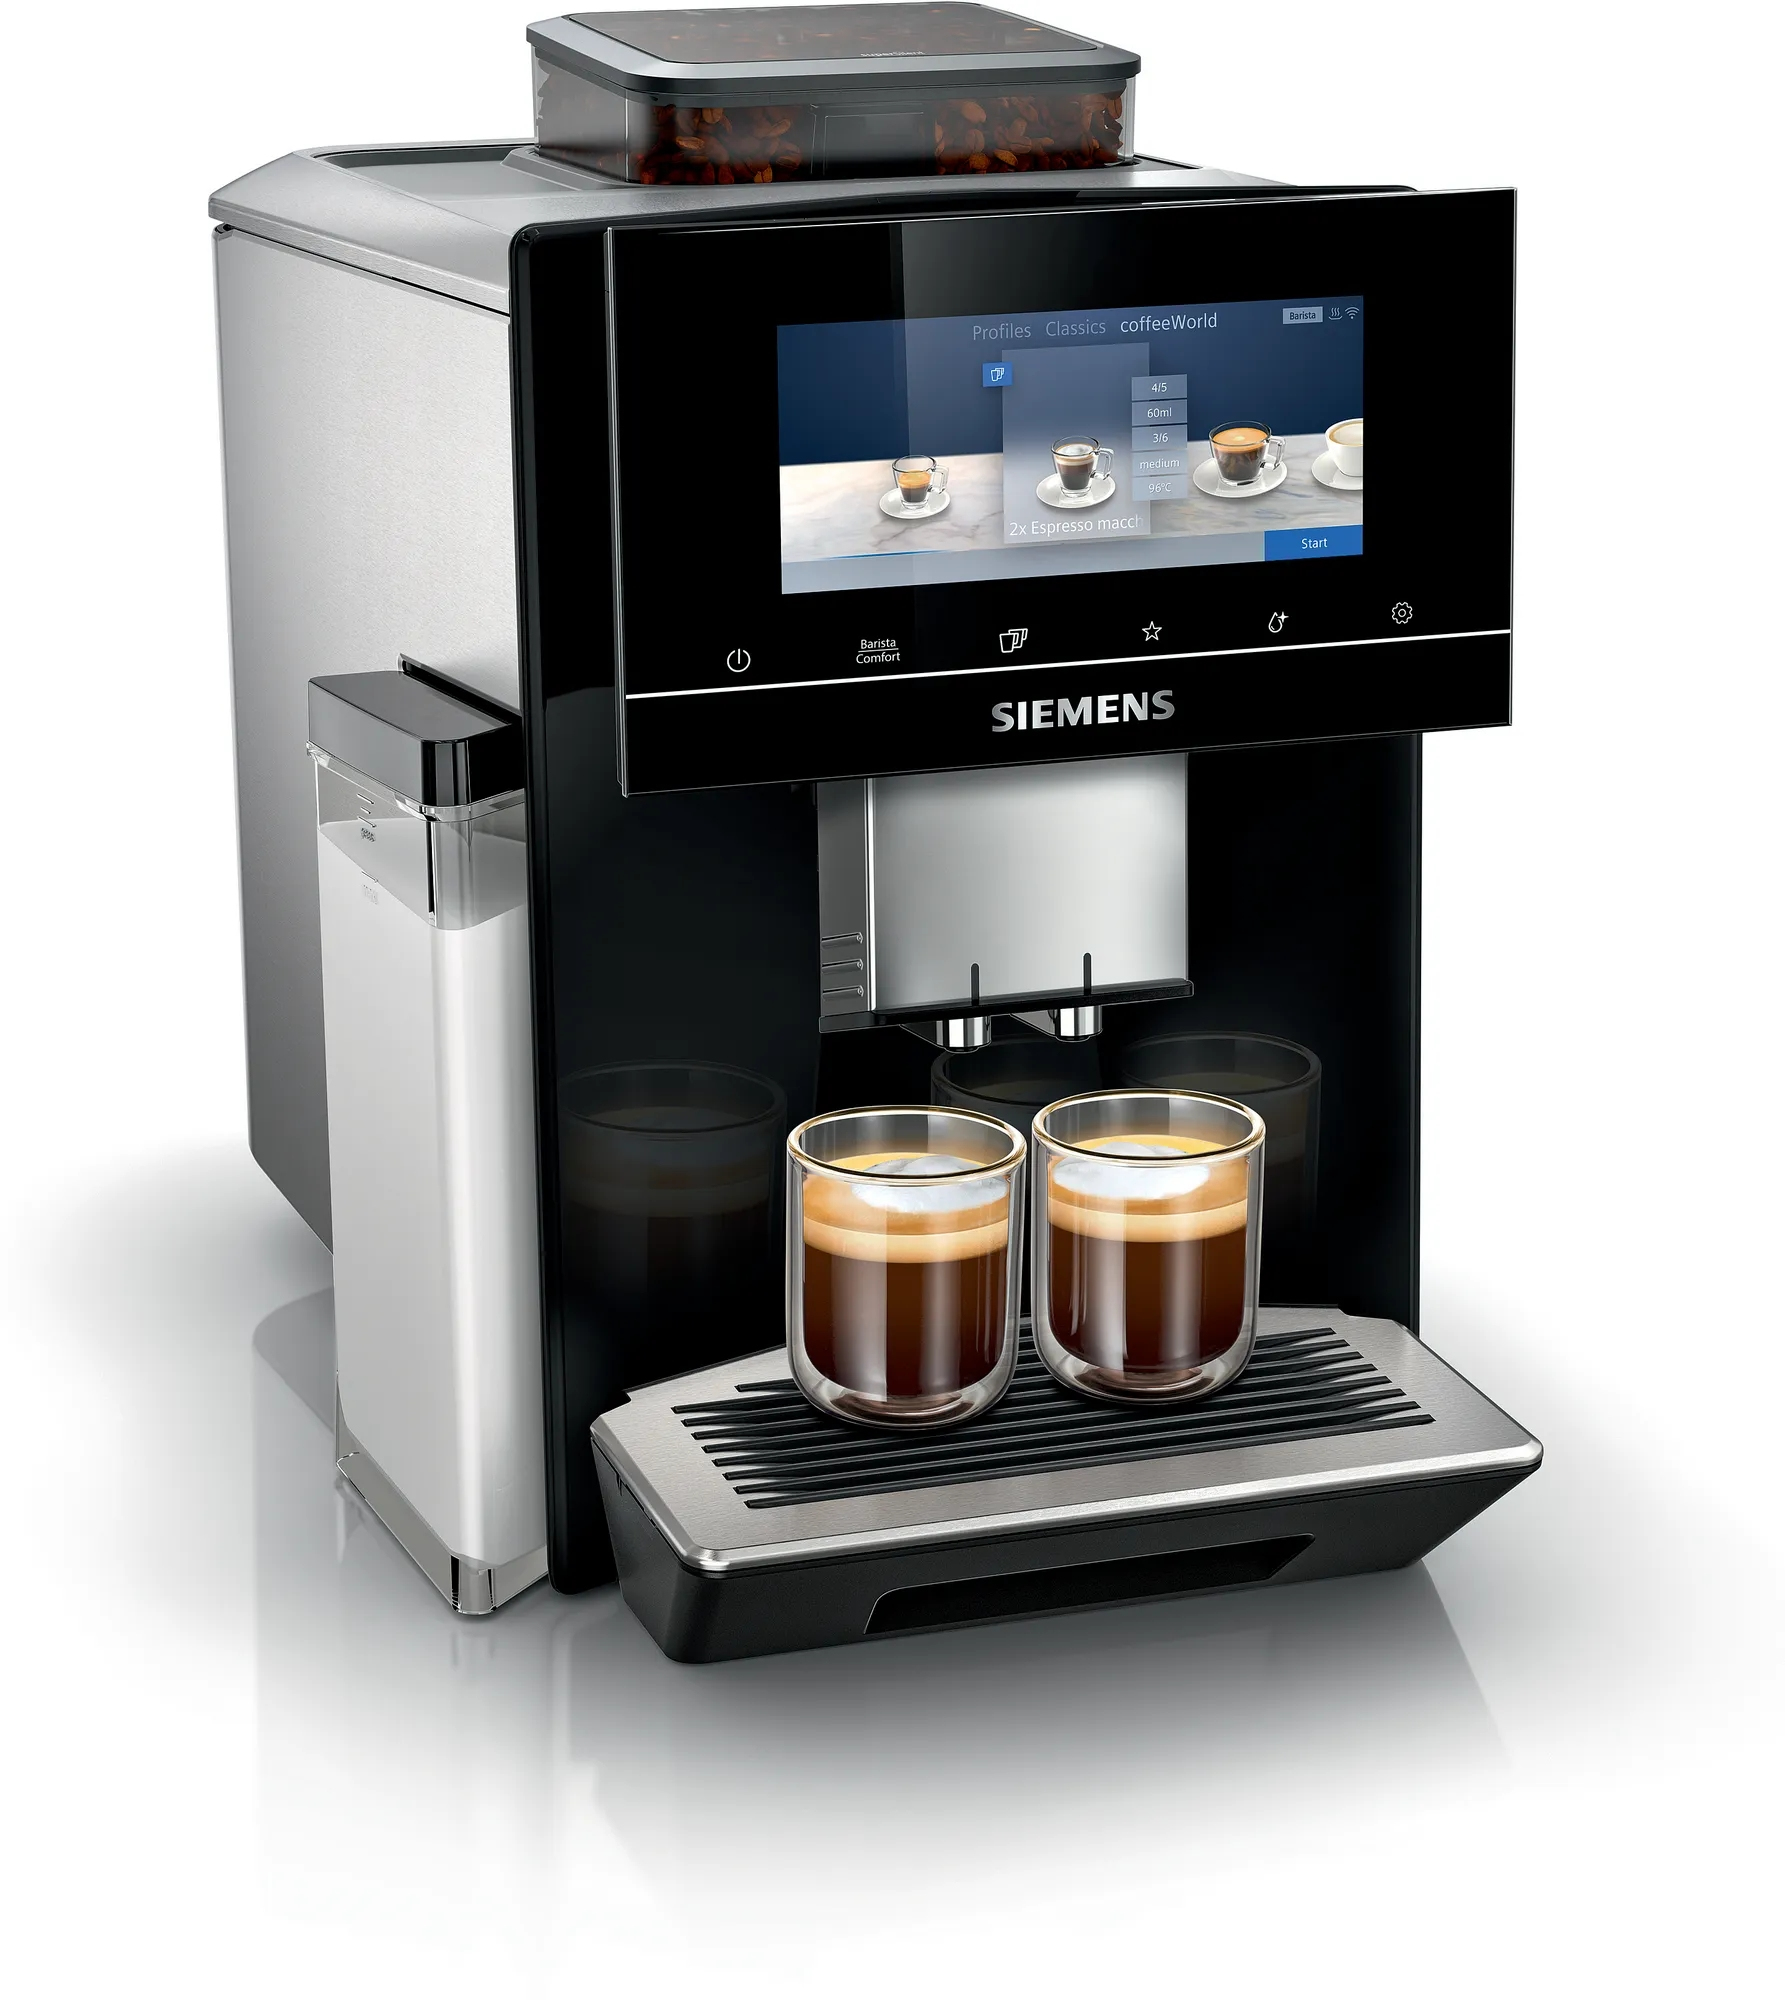 Siemens TQ905R09 coffee maker